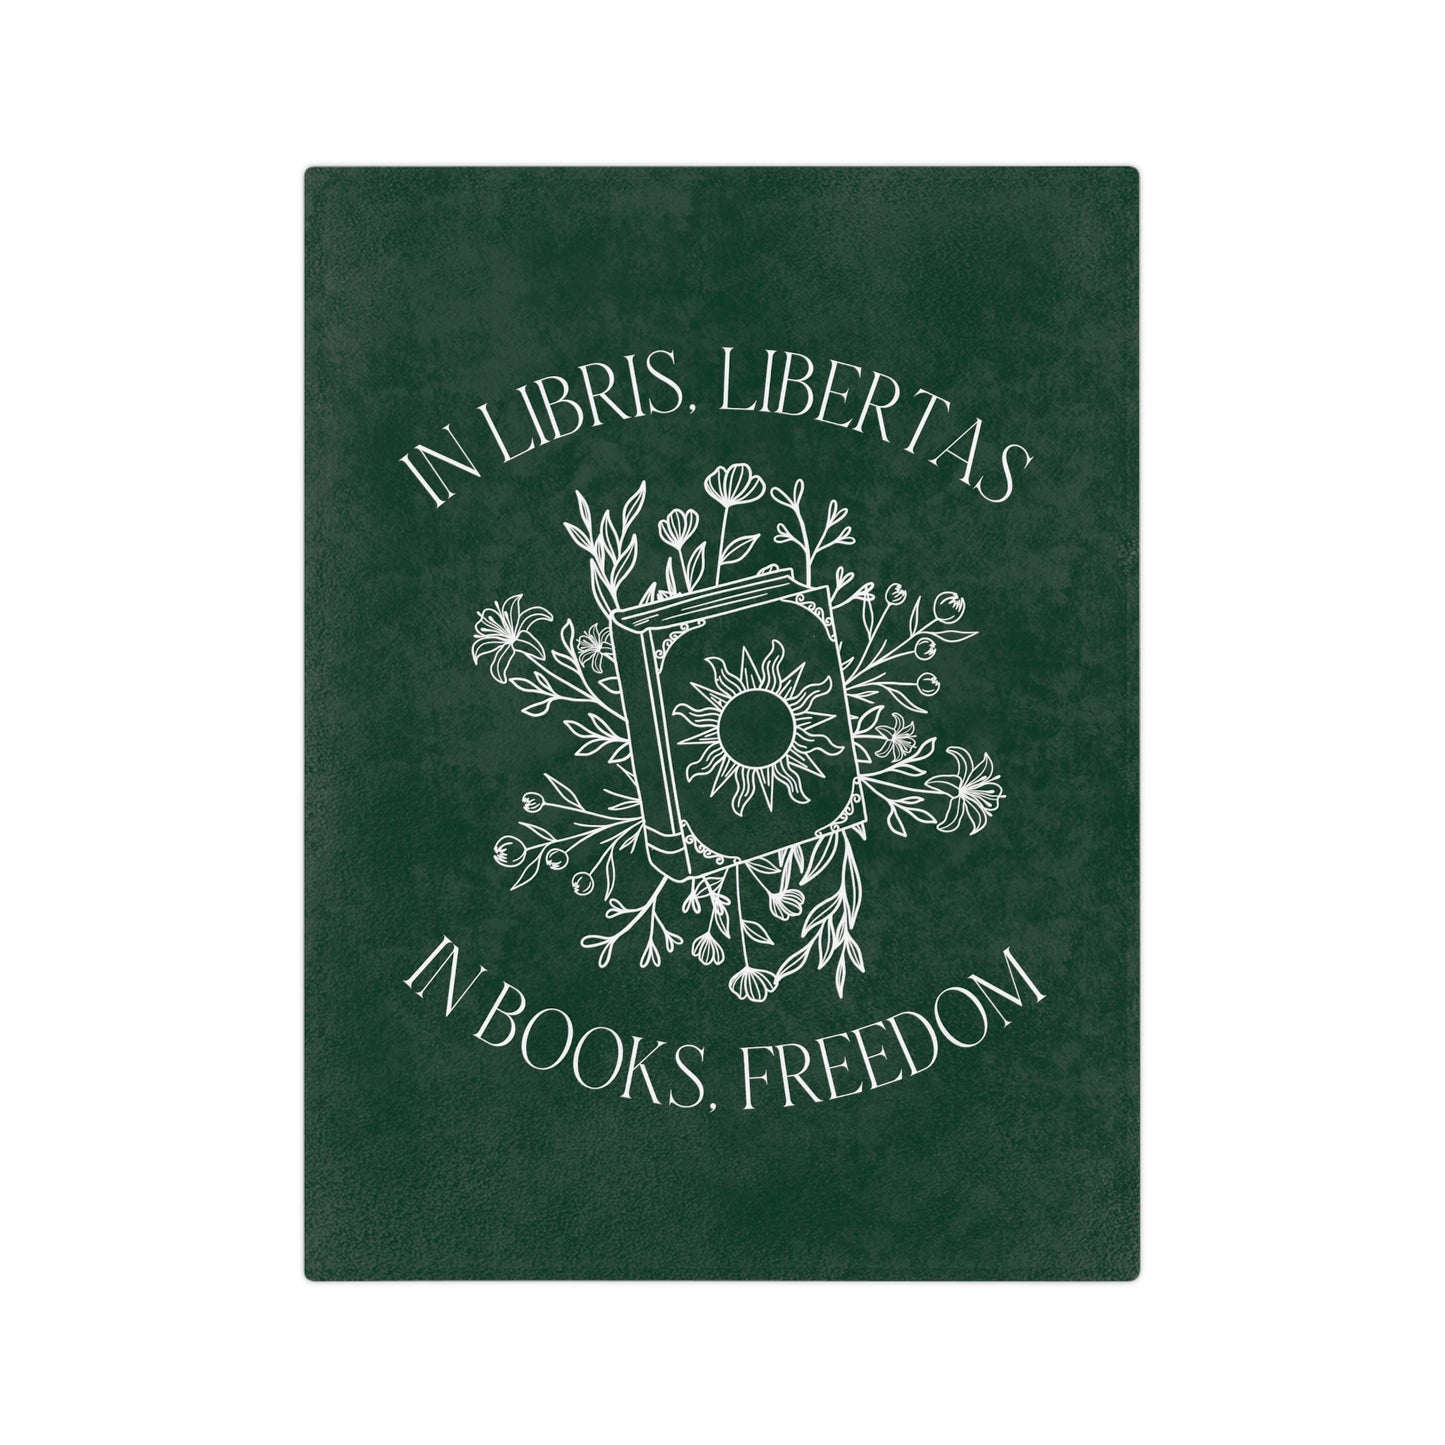 In books, freedom Blanket